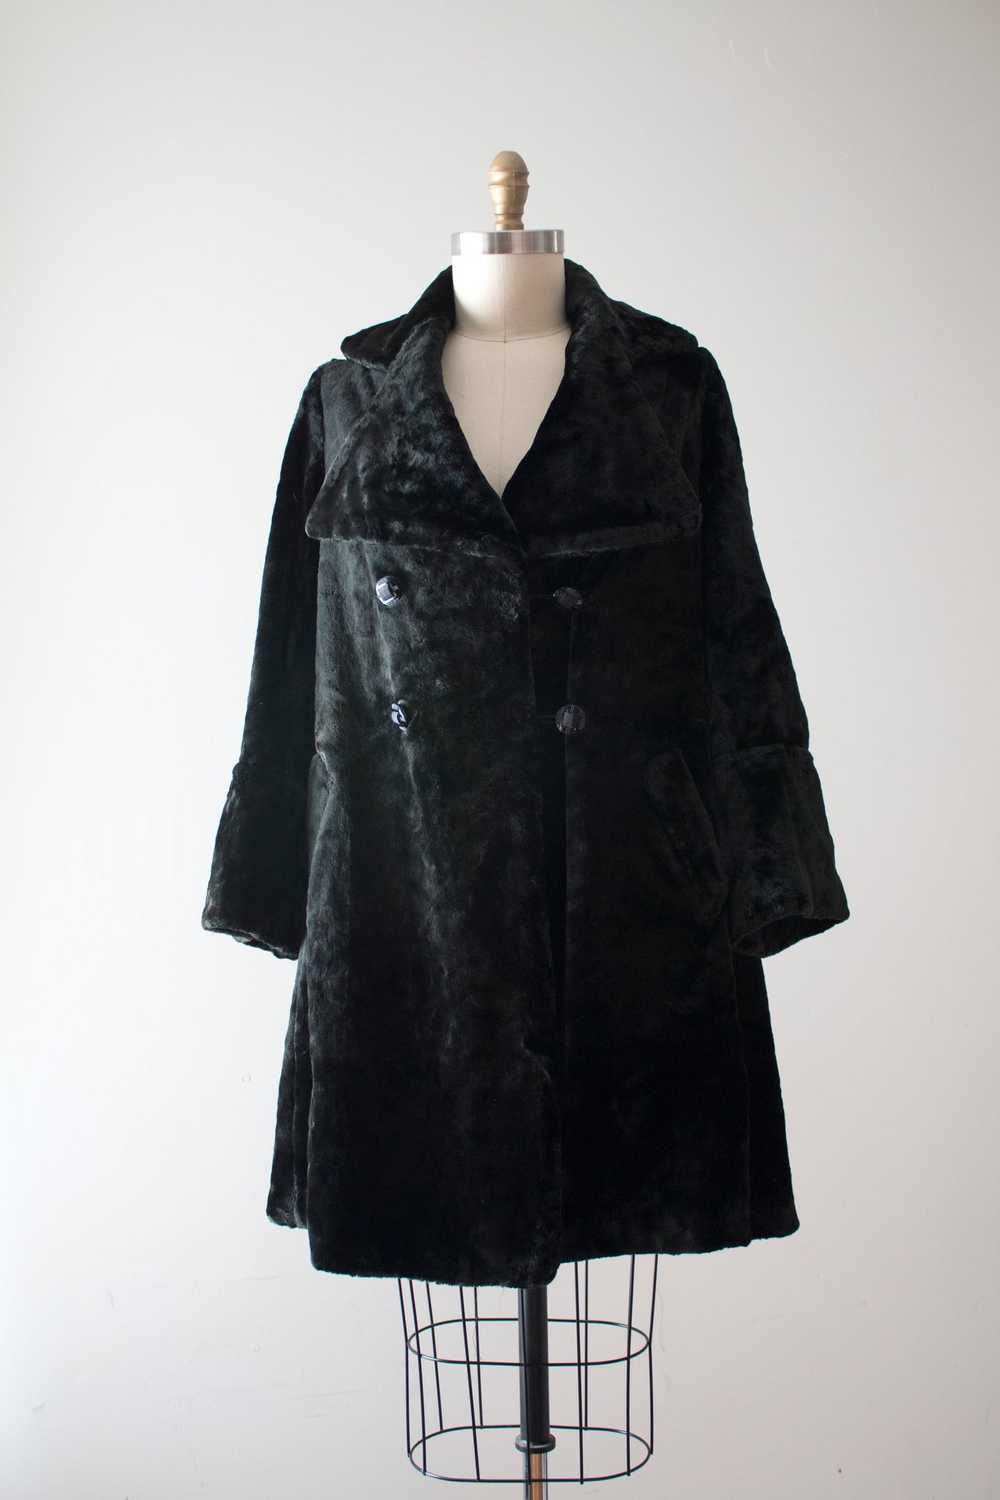 MARKED DOWN vintage 1920s faux fur coat - image 1